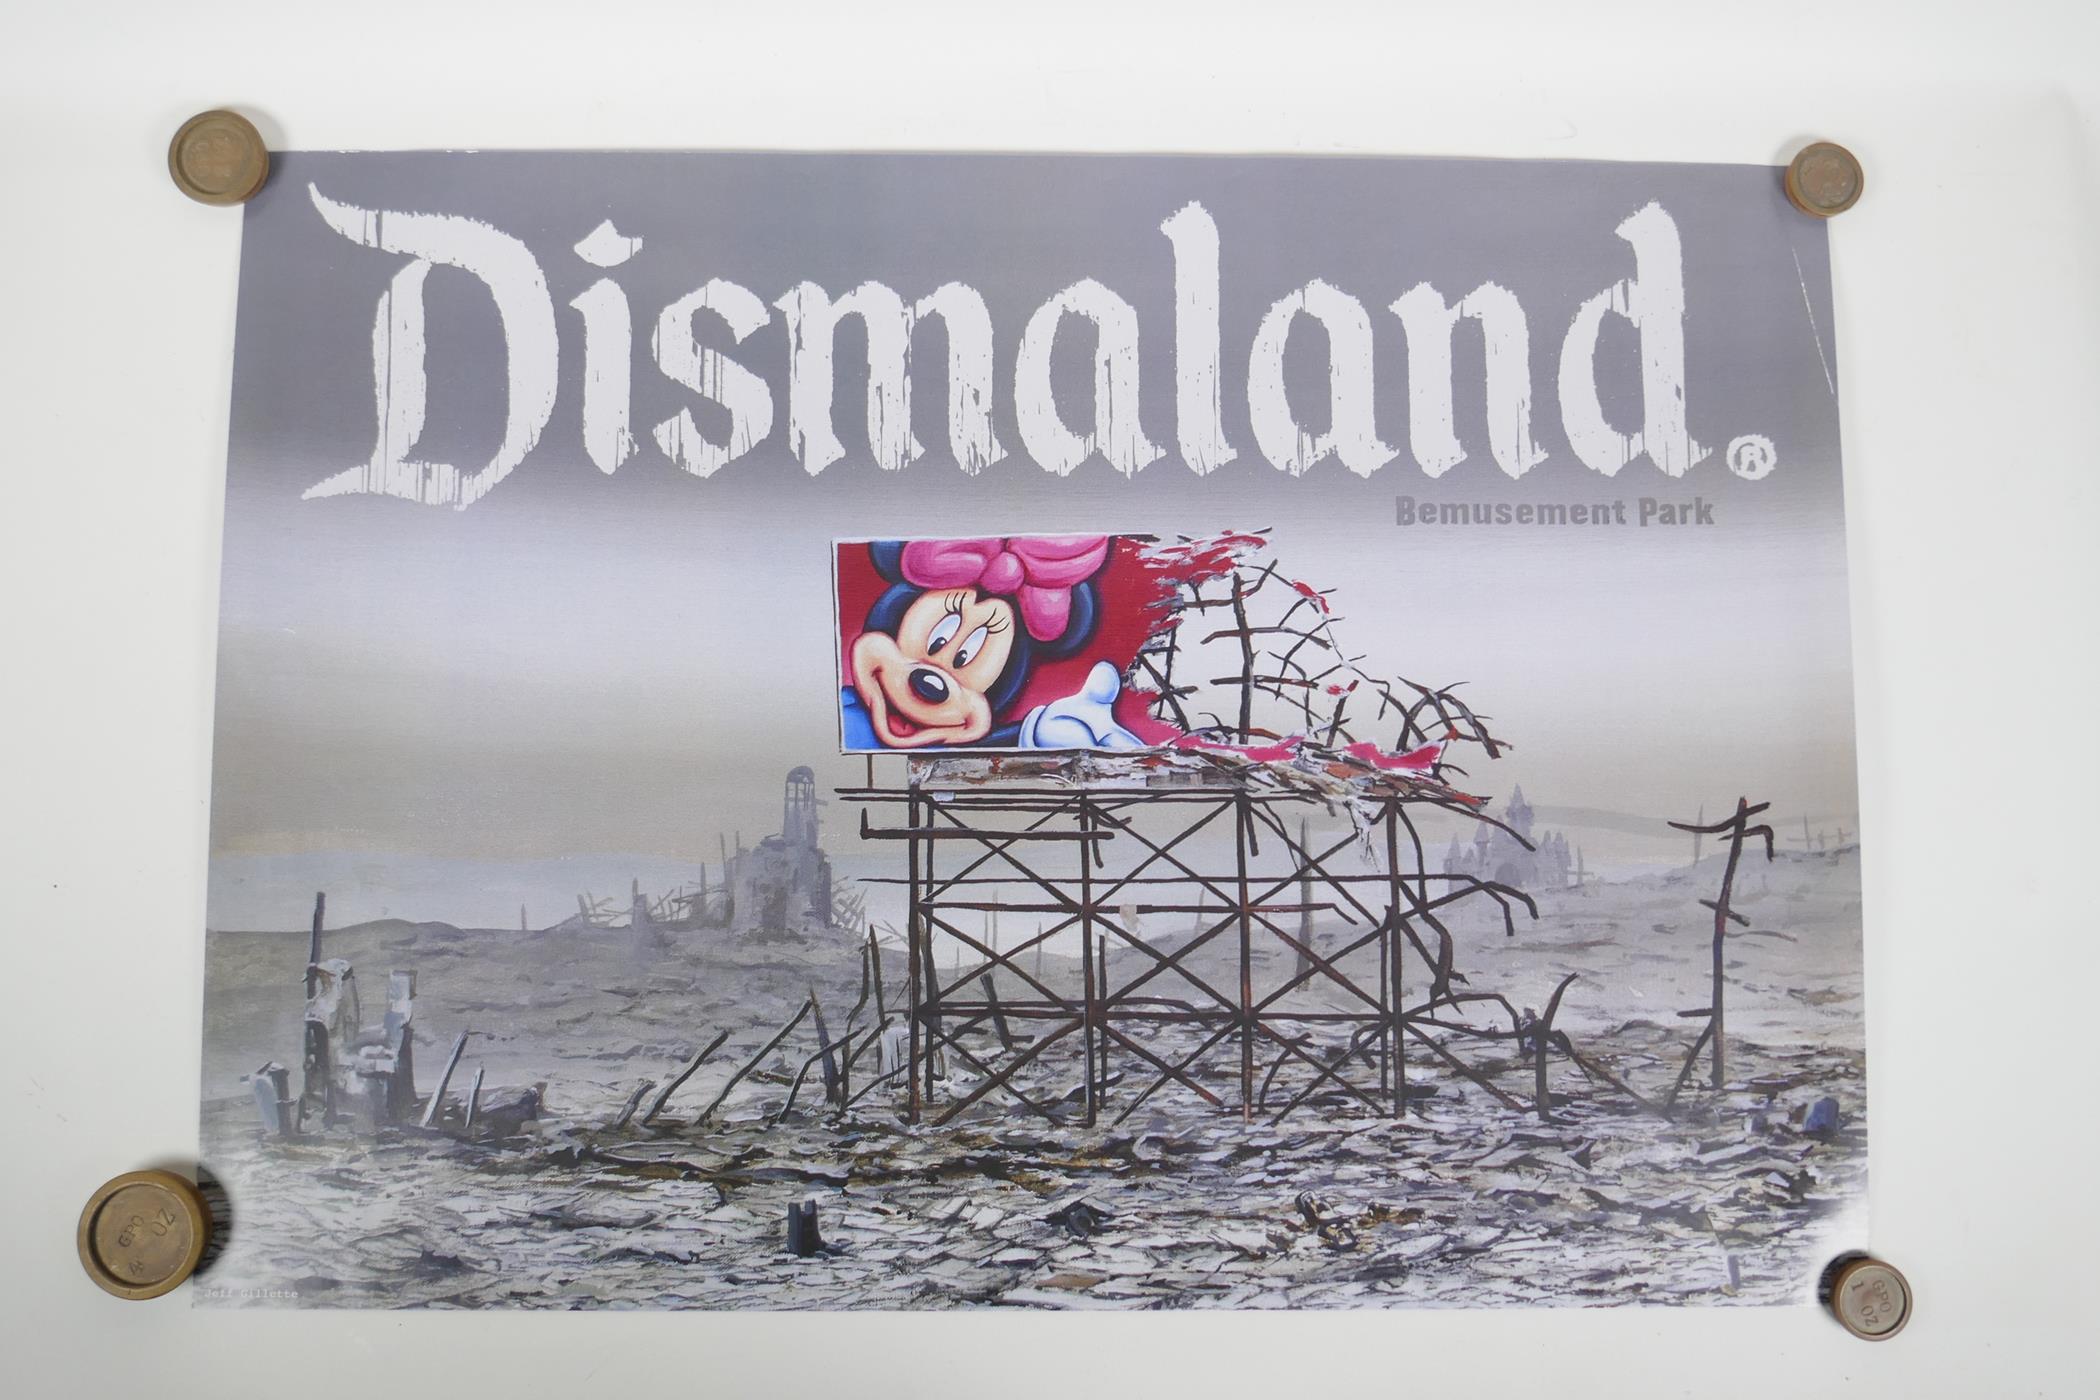 Jeff Gillette, 'Dismaland Bemusement Park' poster, creased corner, 23½" x 16½" - Image 2 of 4